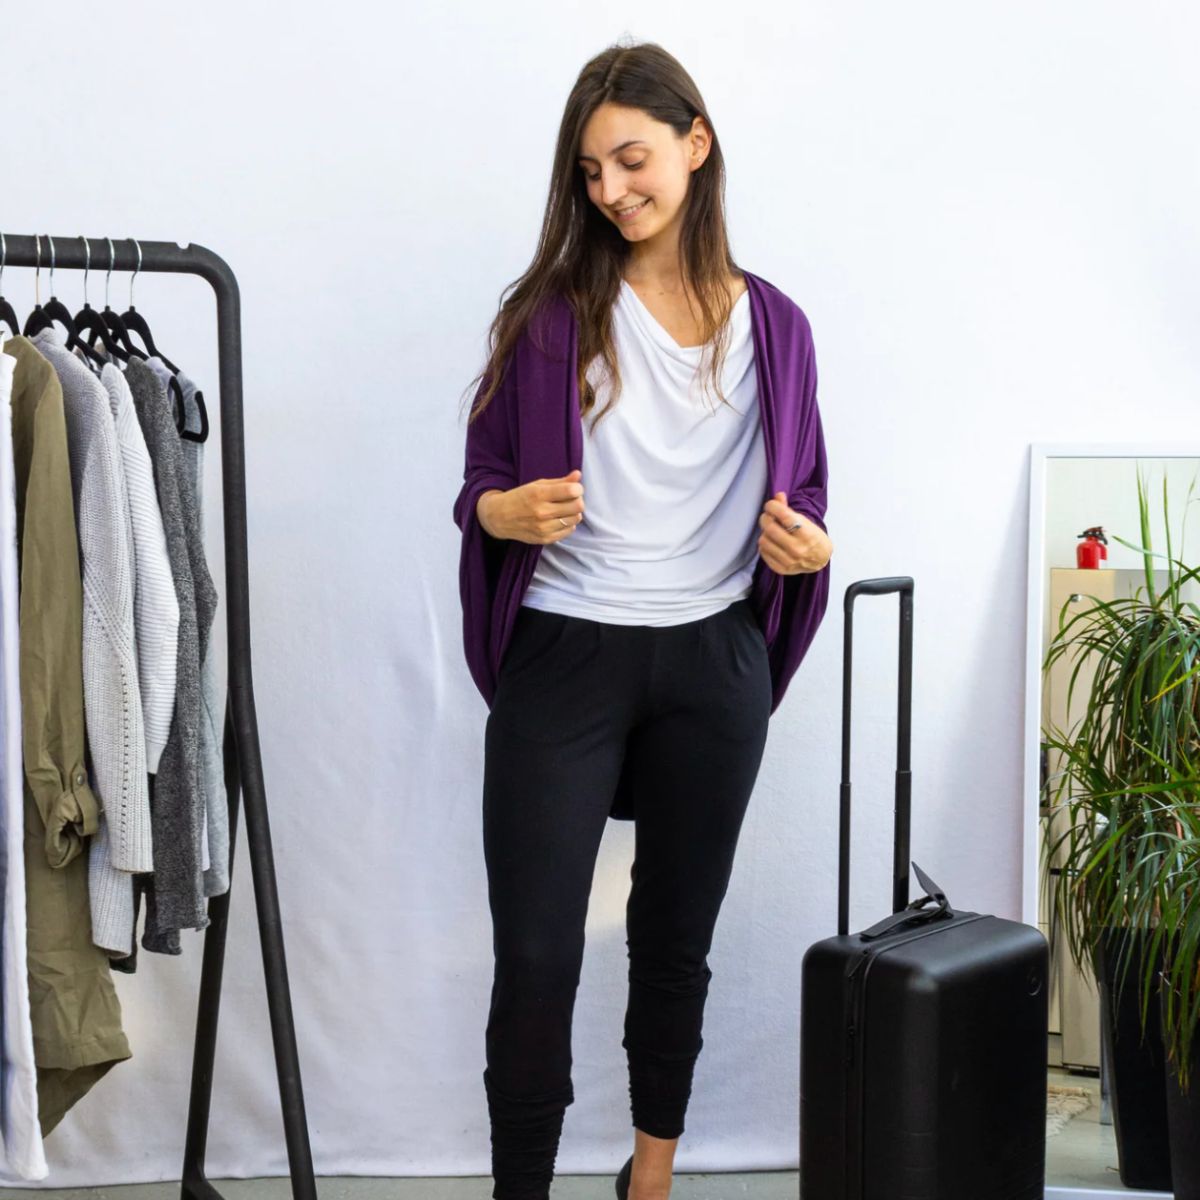 Women's Travel Clothing